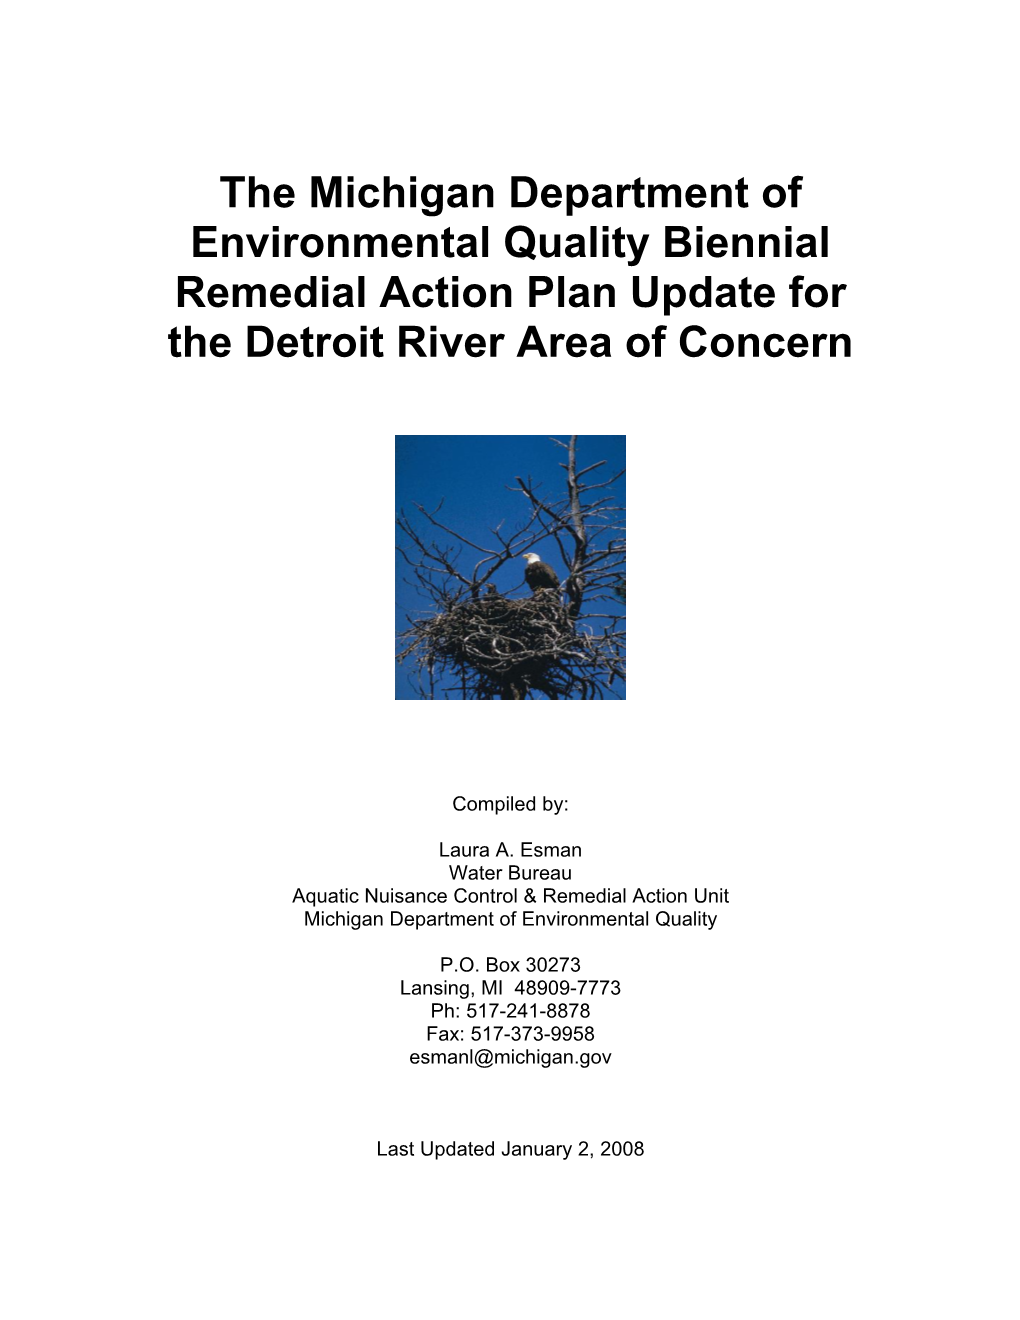 Detroit River Remedial Action Plan Update